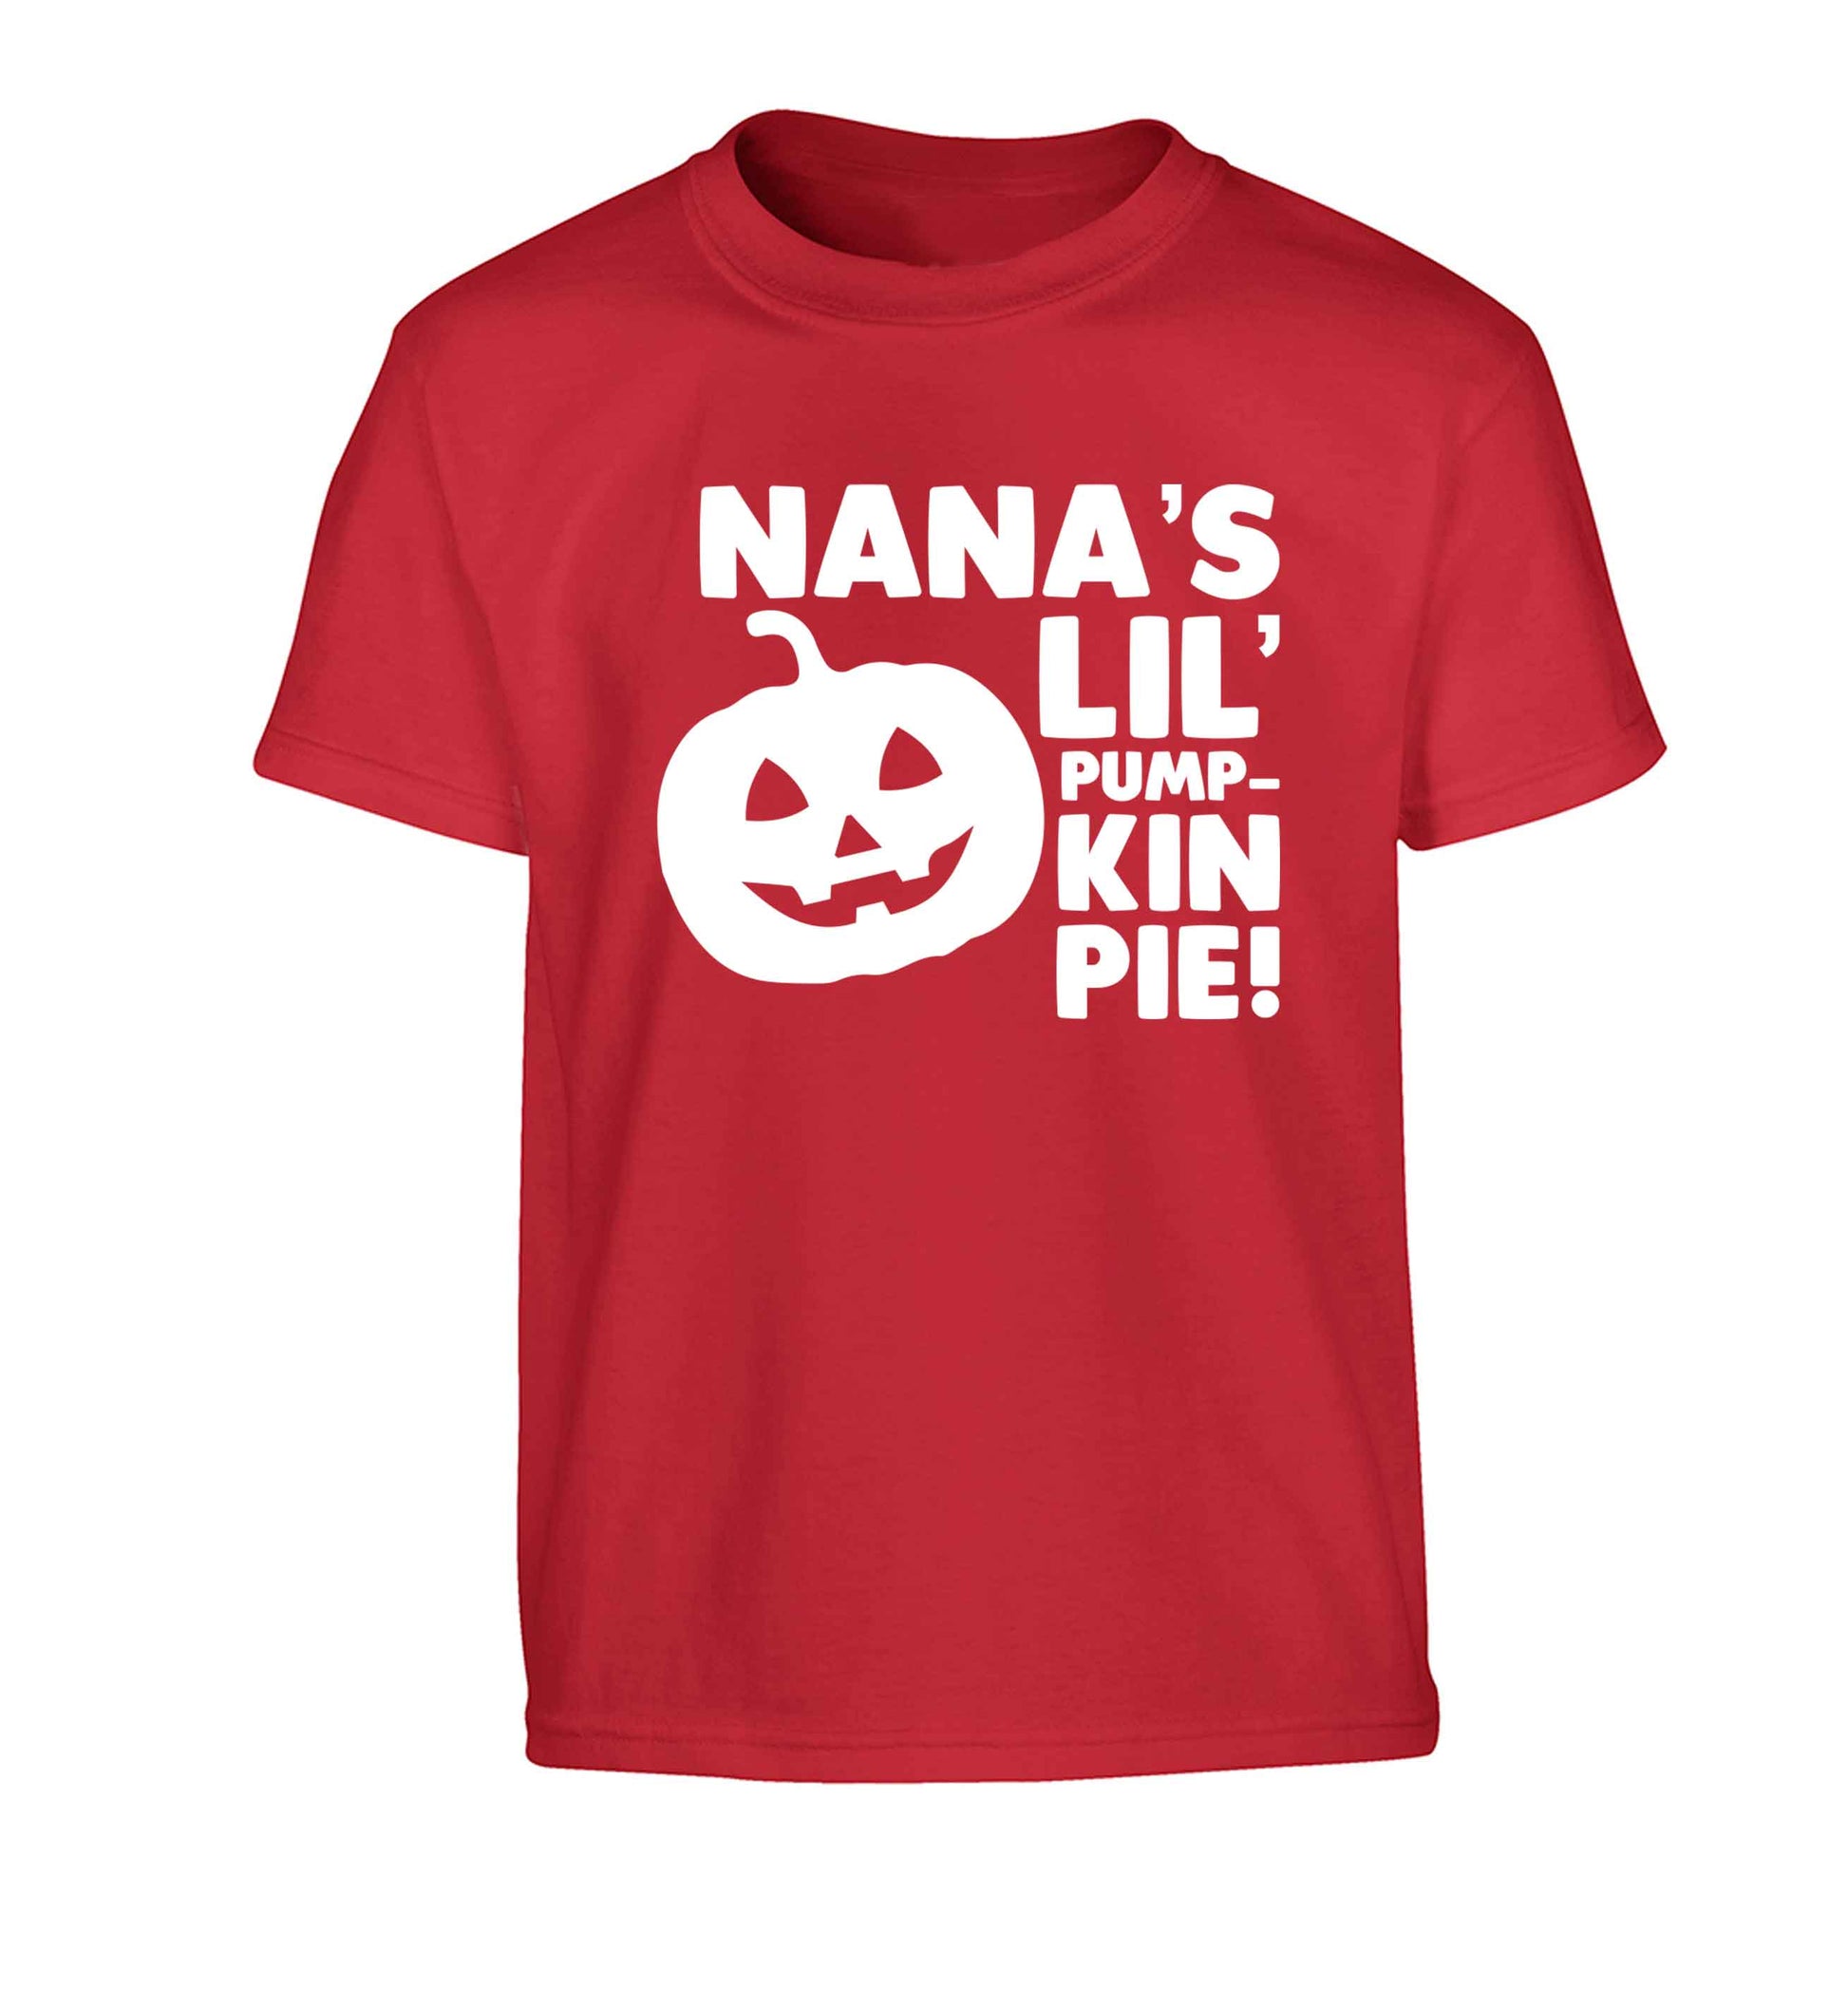 Nana's lil' pumpkin pie Children's red Tshirt 12-13 Years